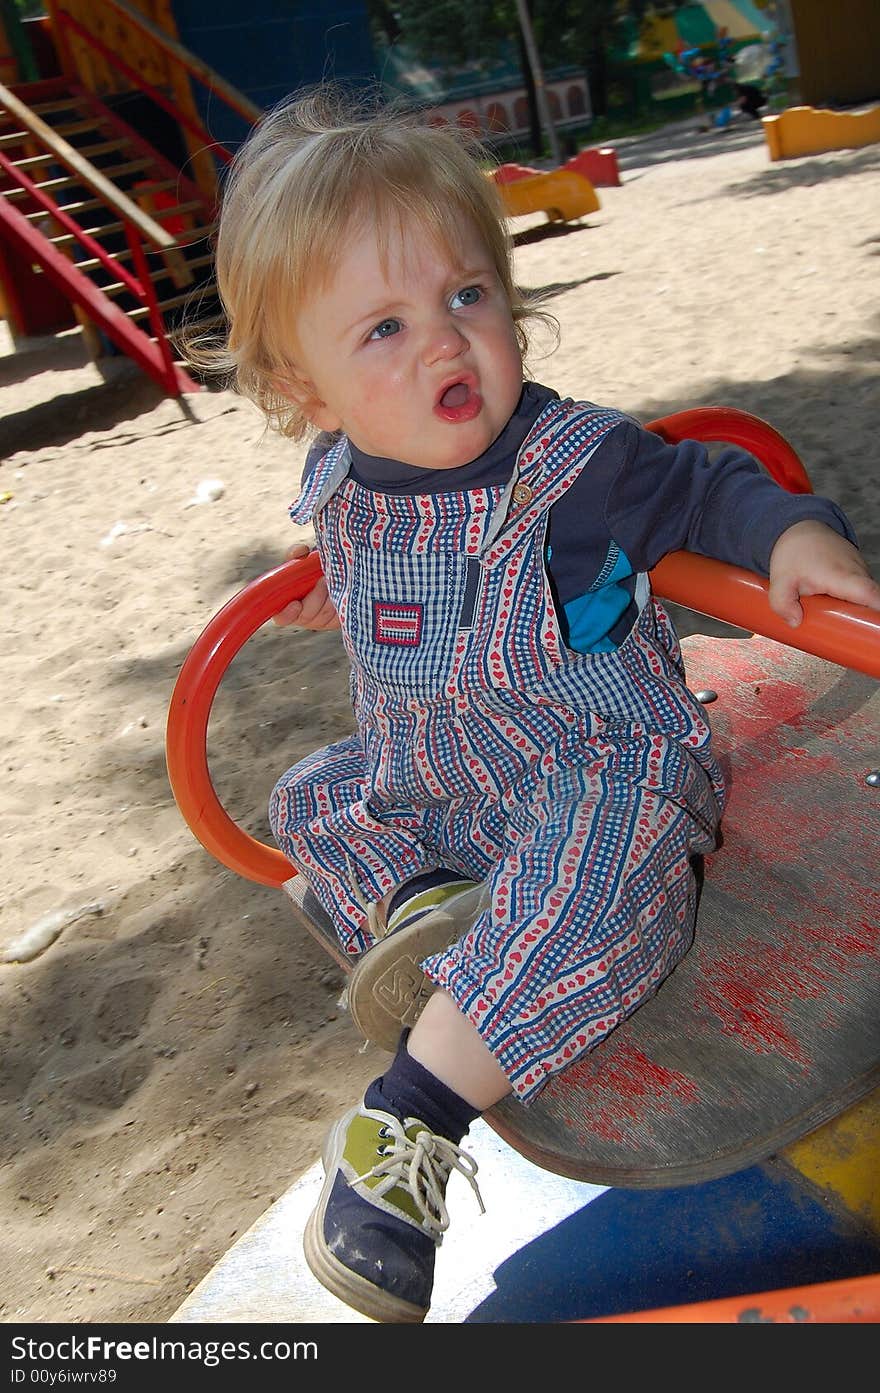 Sweet baby on merry-go-round having fun on the playground